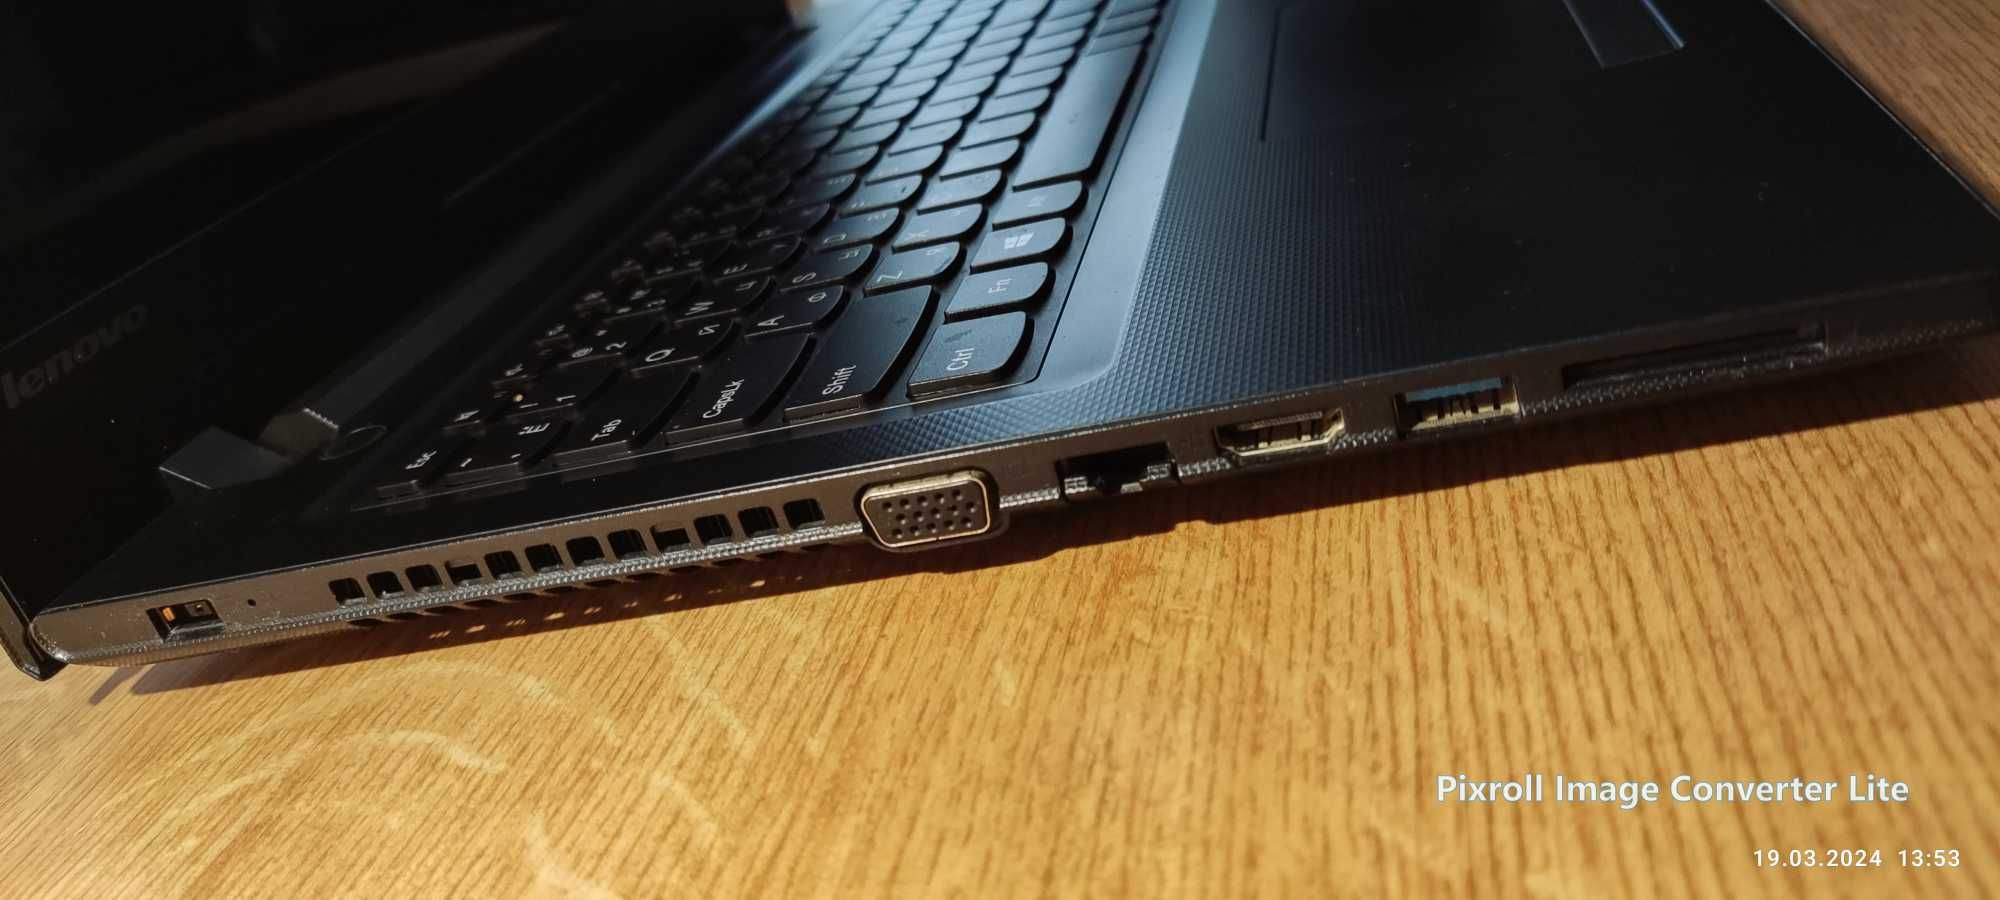 Ноутбук Lenovo ideapad 300-15ISK i5, 8gb, hdd 1000gb